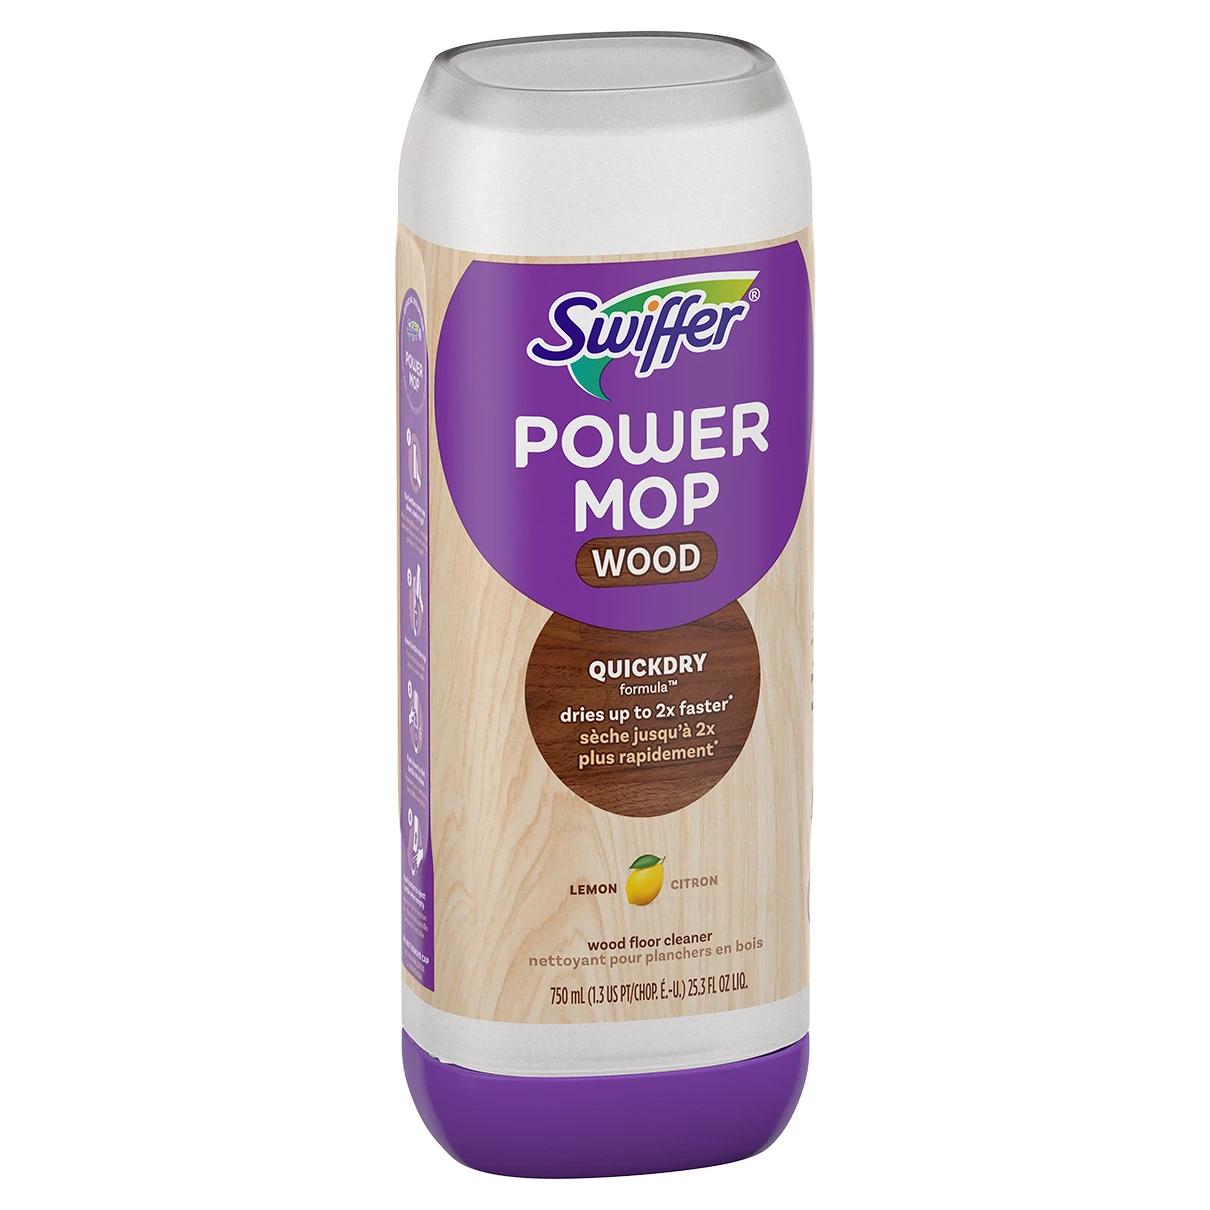 Swiffer PowerMop Wood QuickDry Floor Cleaning Solution, Lemon